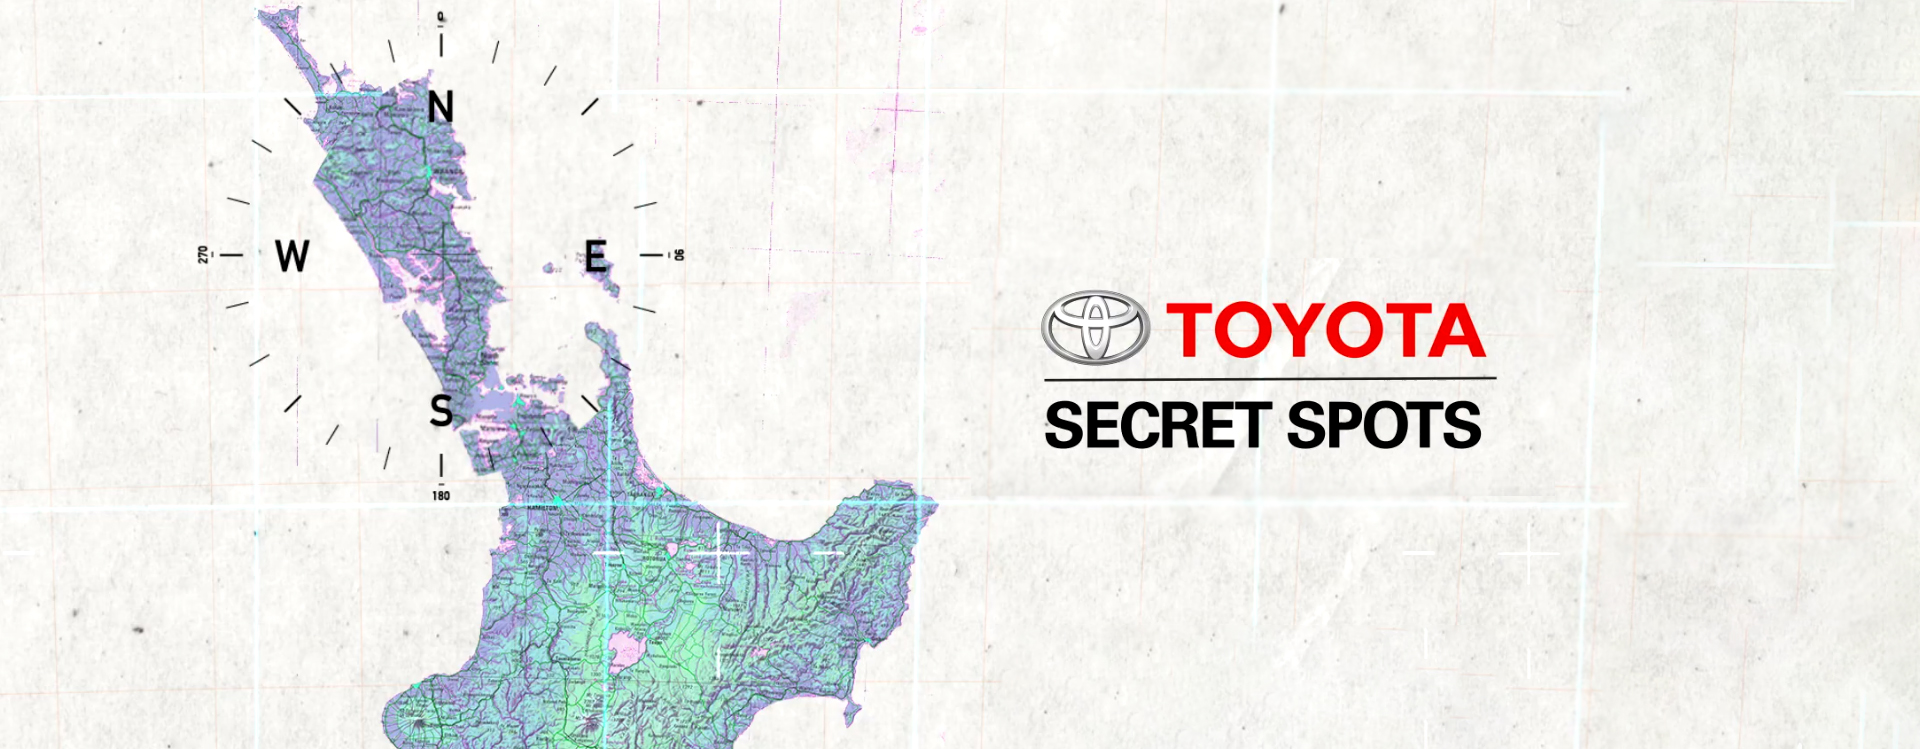 Toyota-secret-spots-hero-1920x749